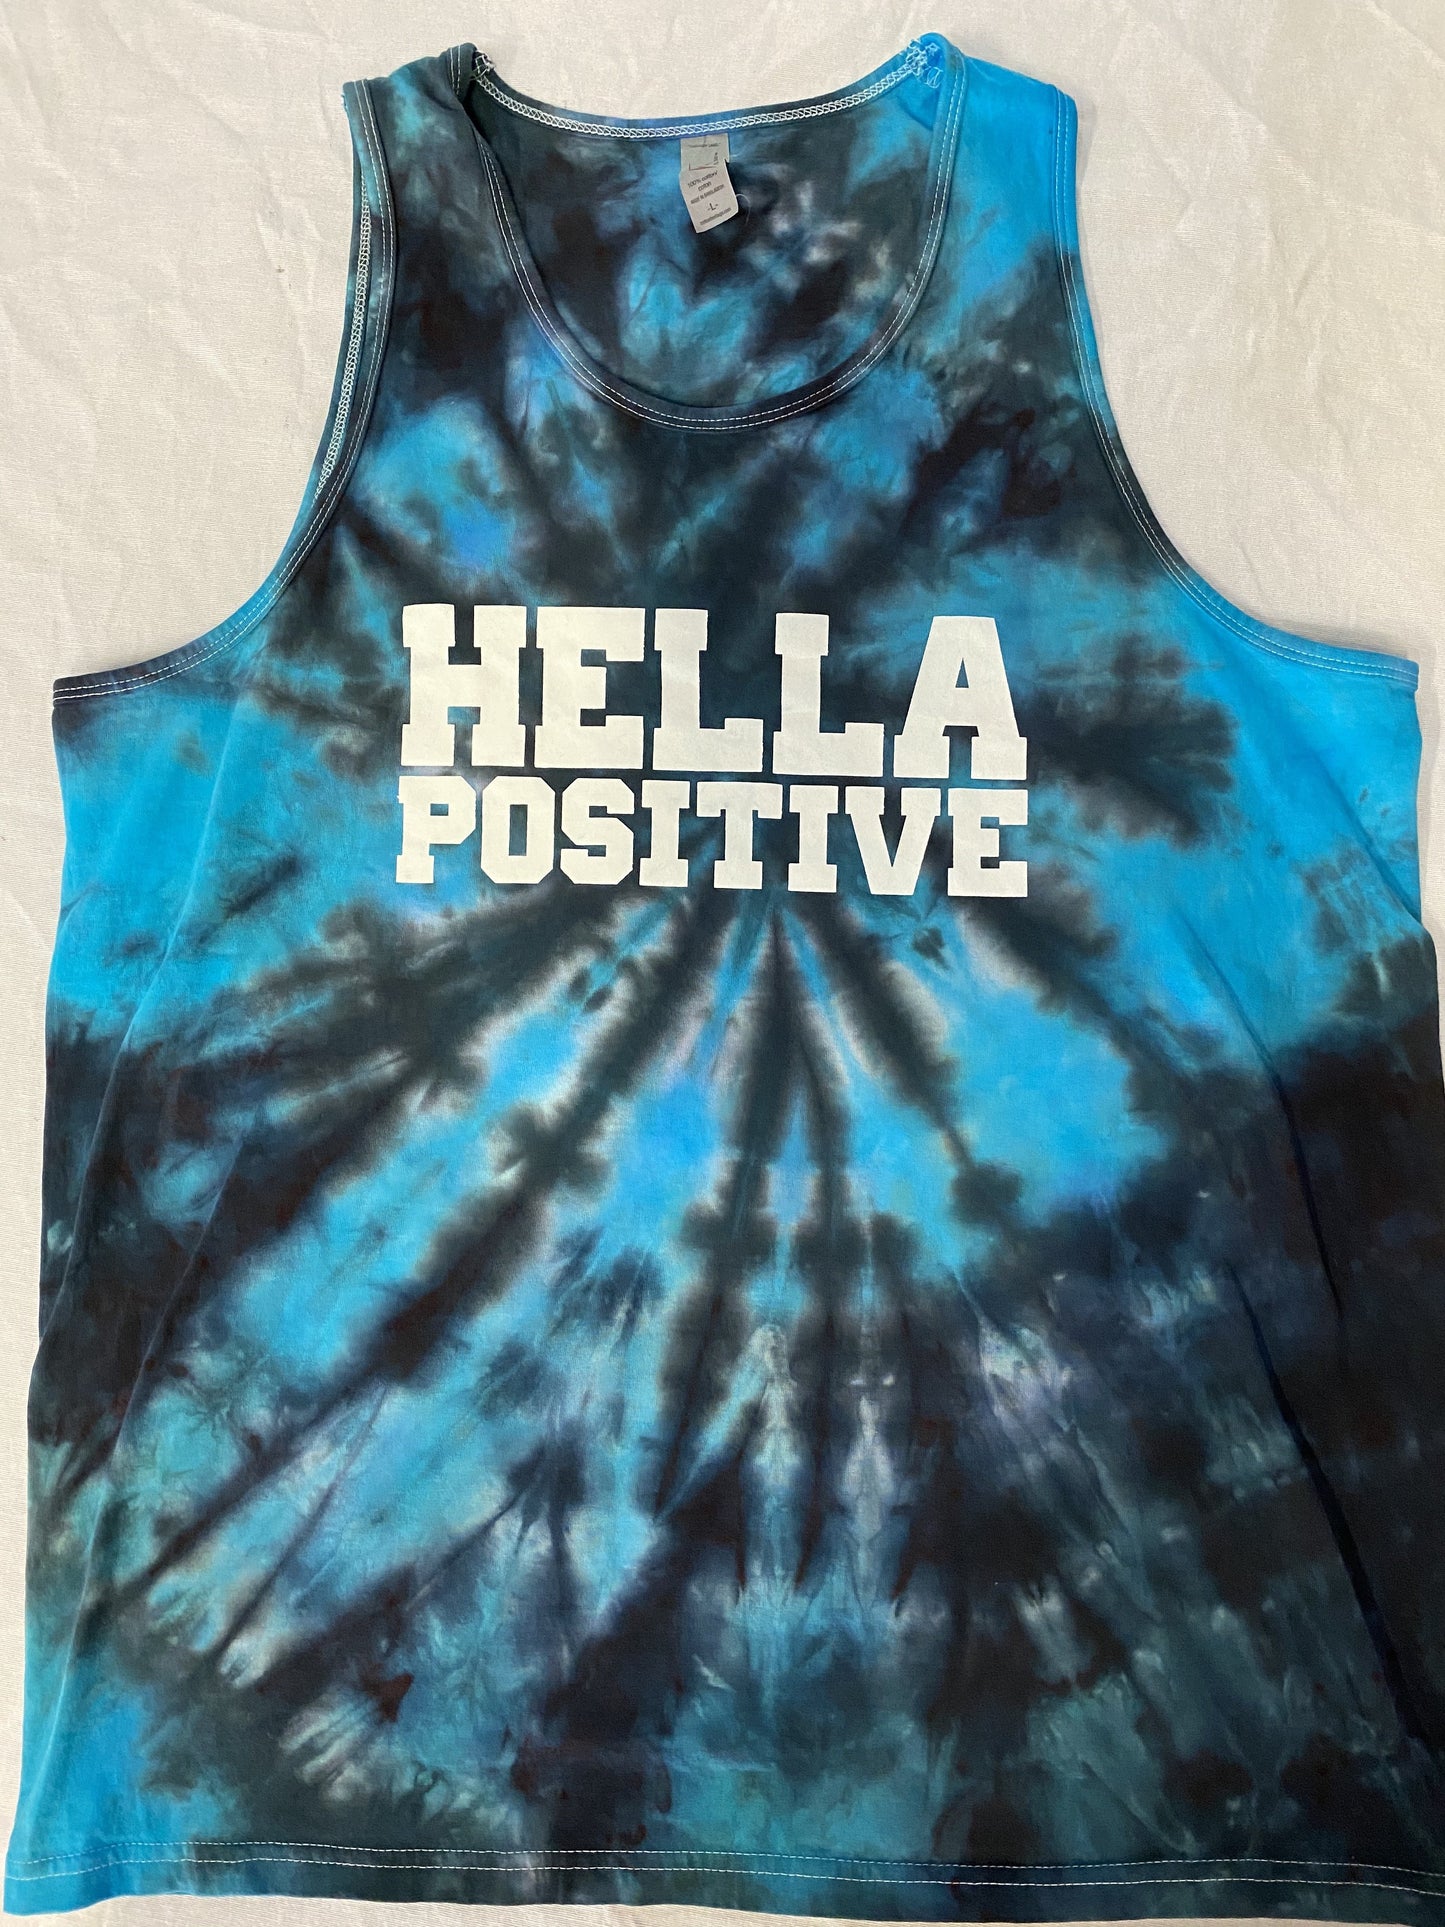 Hella Positive Tie Dye Tank Top - Large